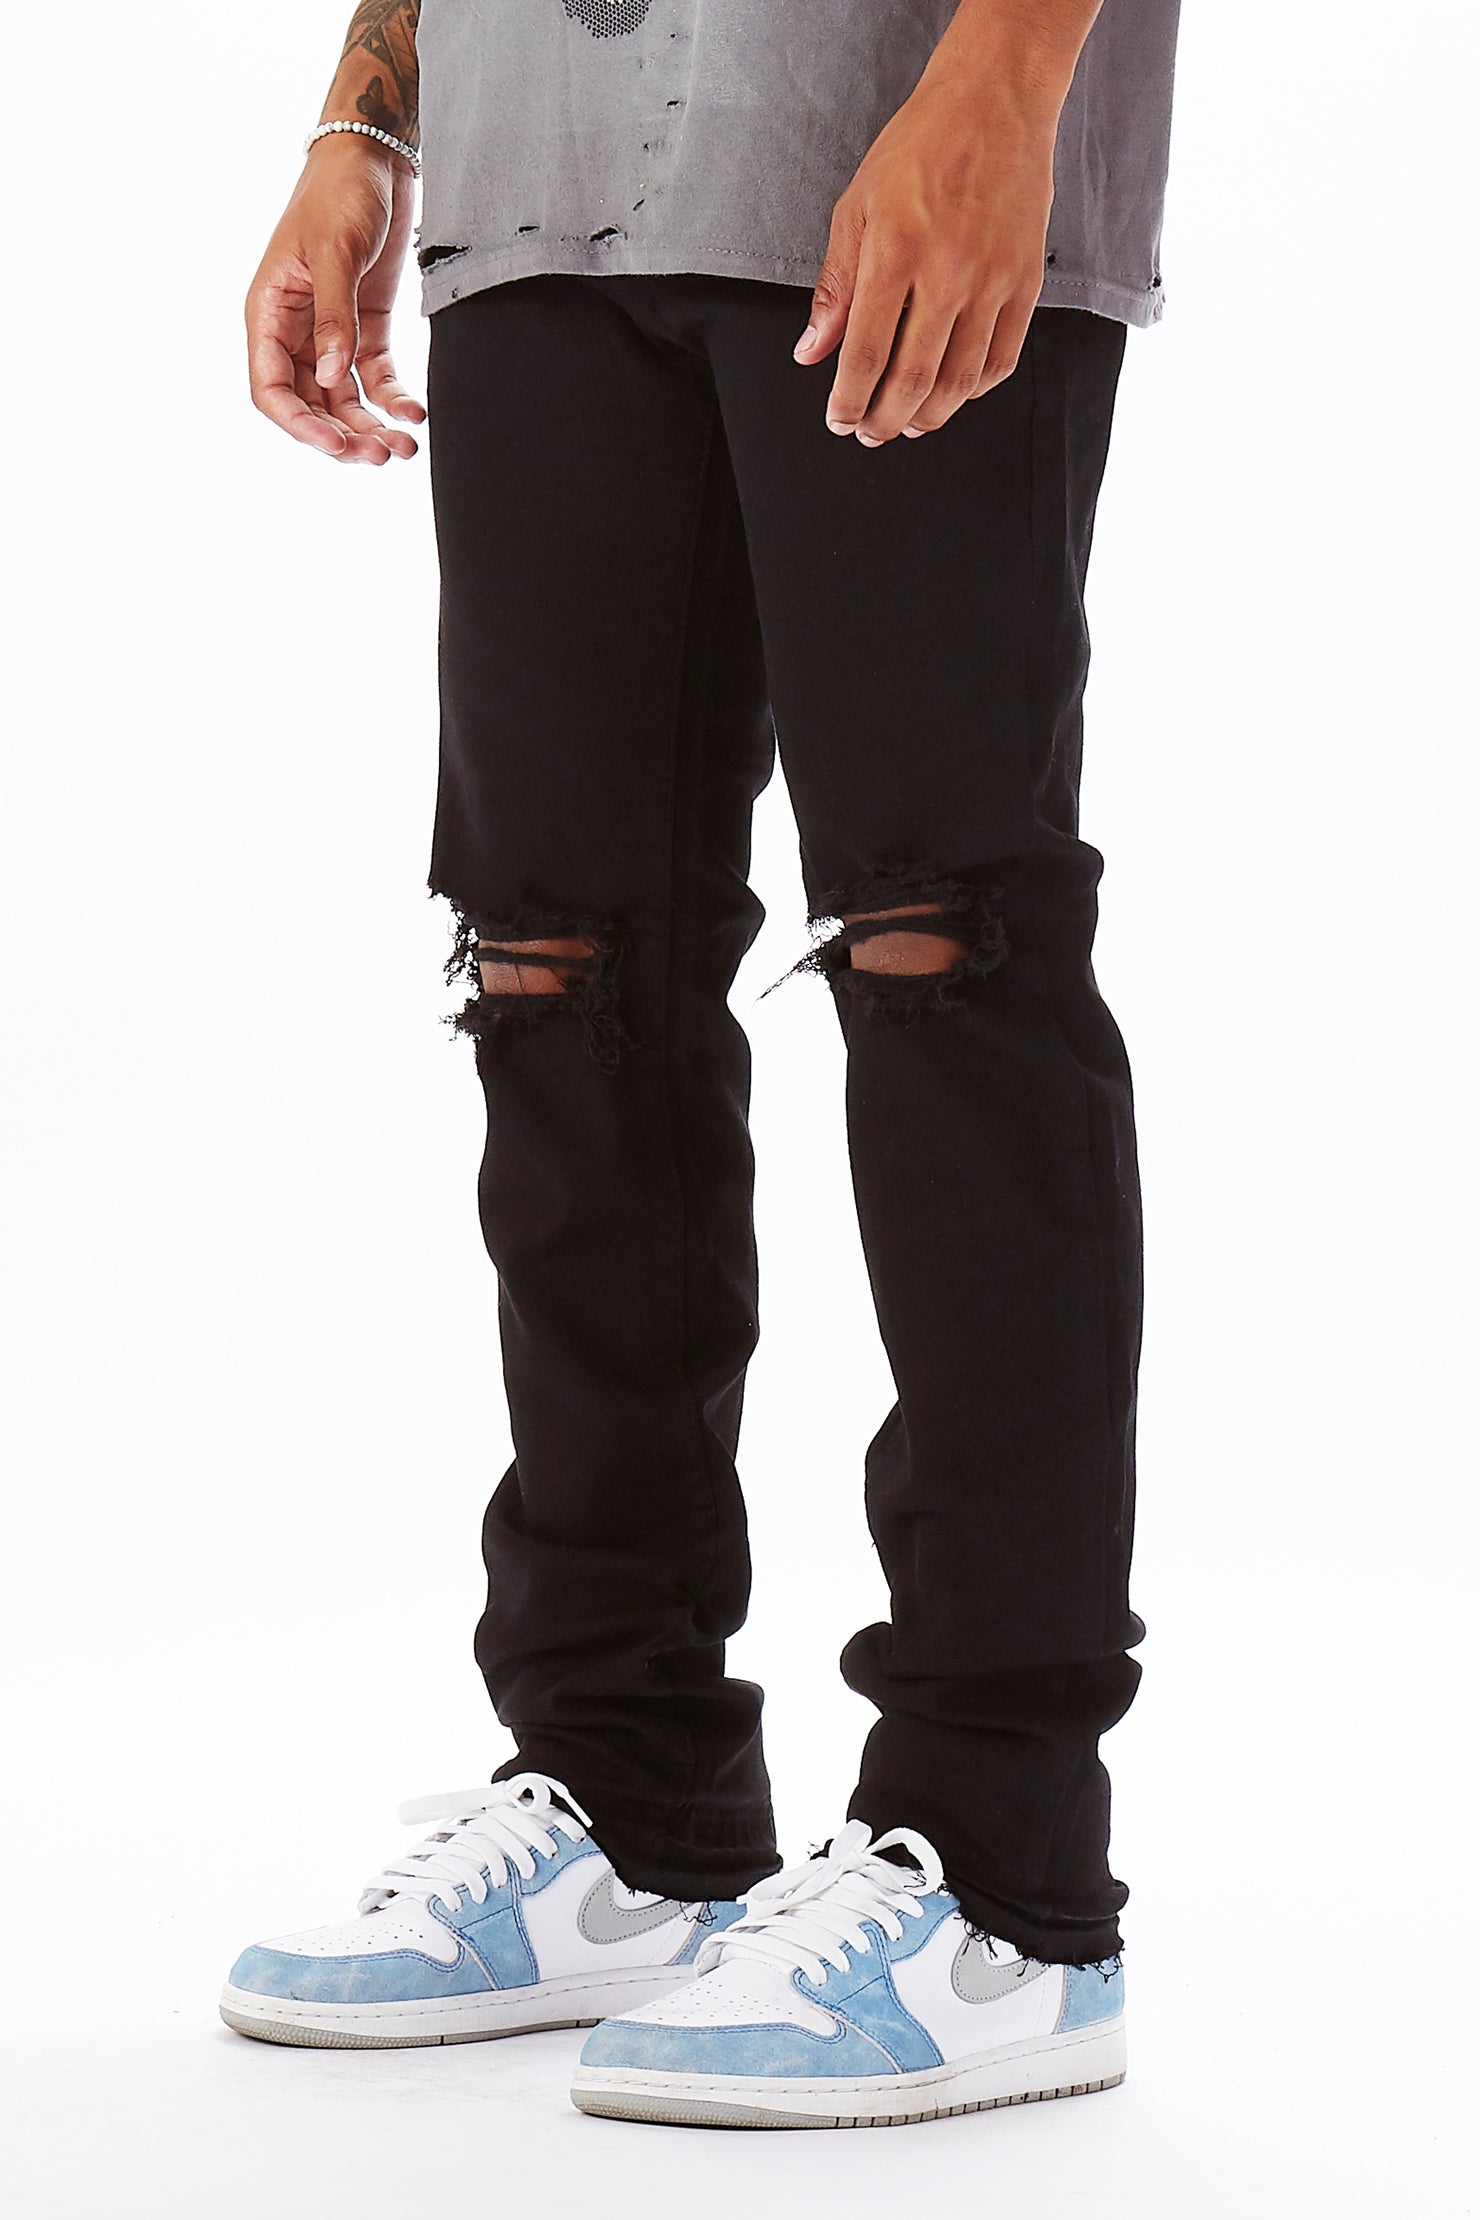  ROCKSTAR ORIGINAL Clothing Men's Carson Black Stacked Flare Jean  - Retro Jeans - Slim Fit - 100% Cotton